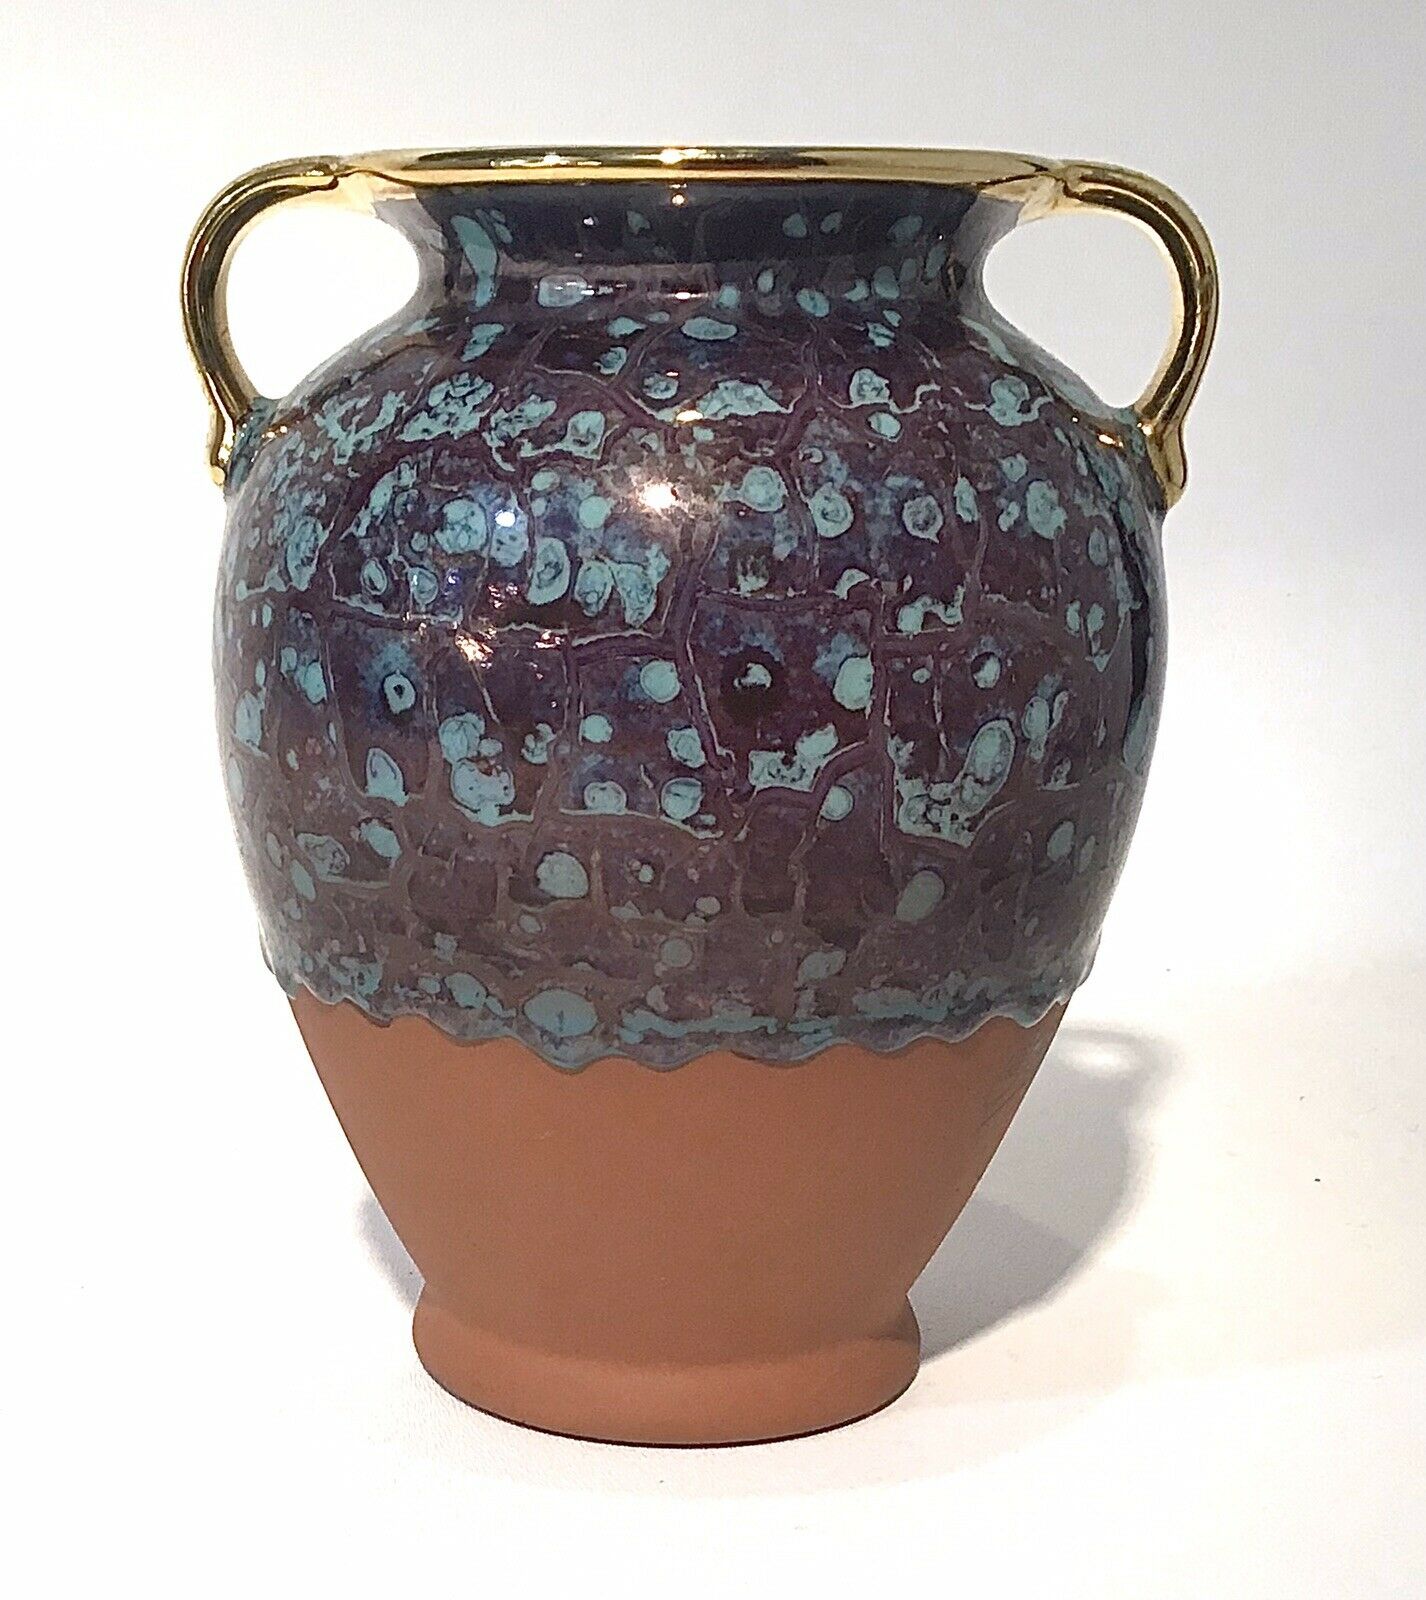 Yapacunchi Vase Vessel Crespo Cuenca Equador Cerámica Gold Clay Ceramic Purple